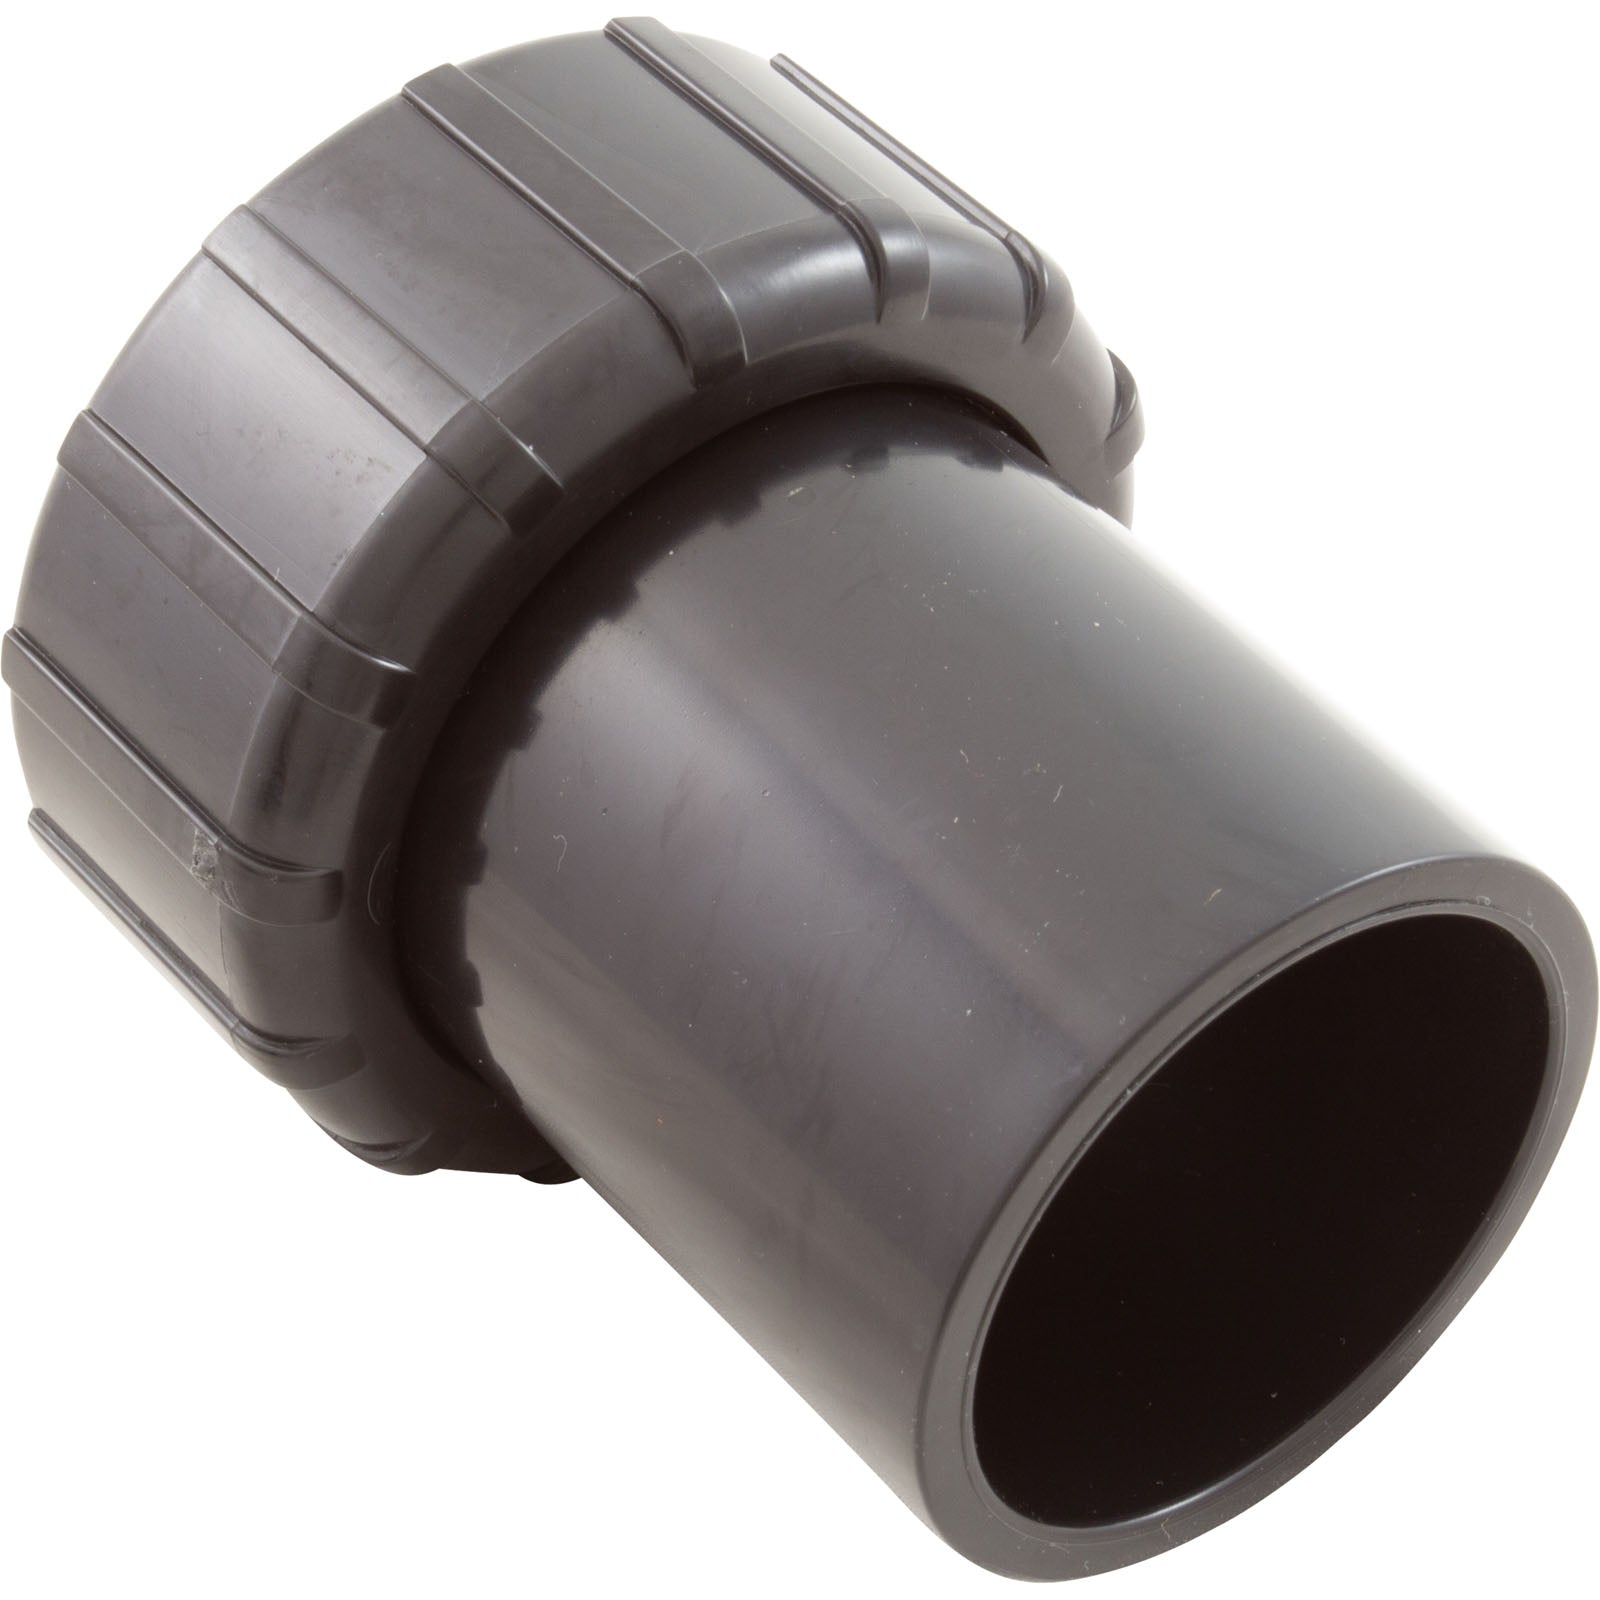 Pump Union  1-1/2", PVC, Raypak 018230F